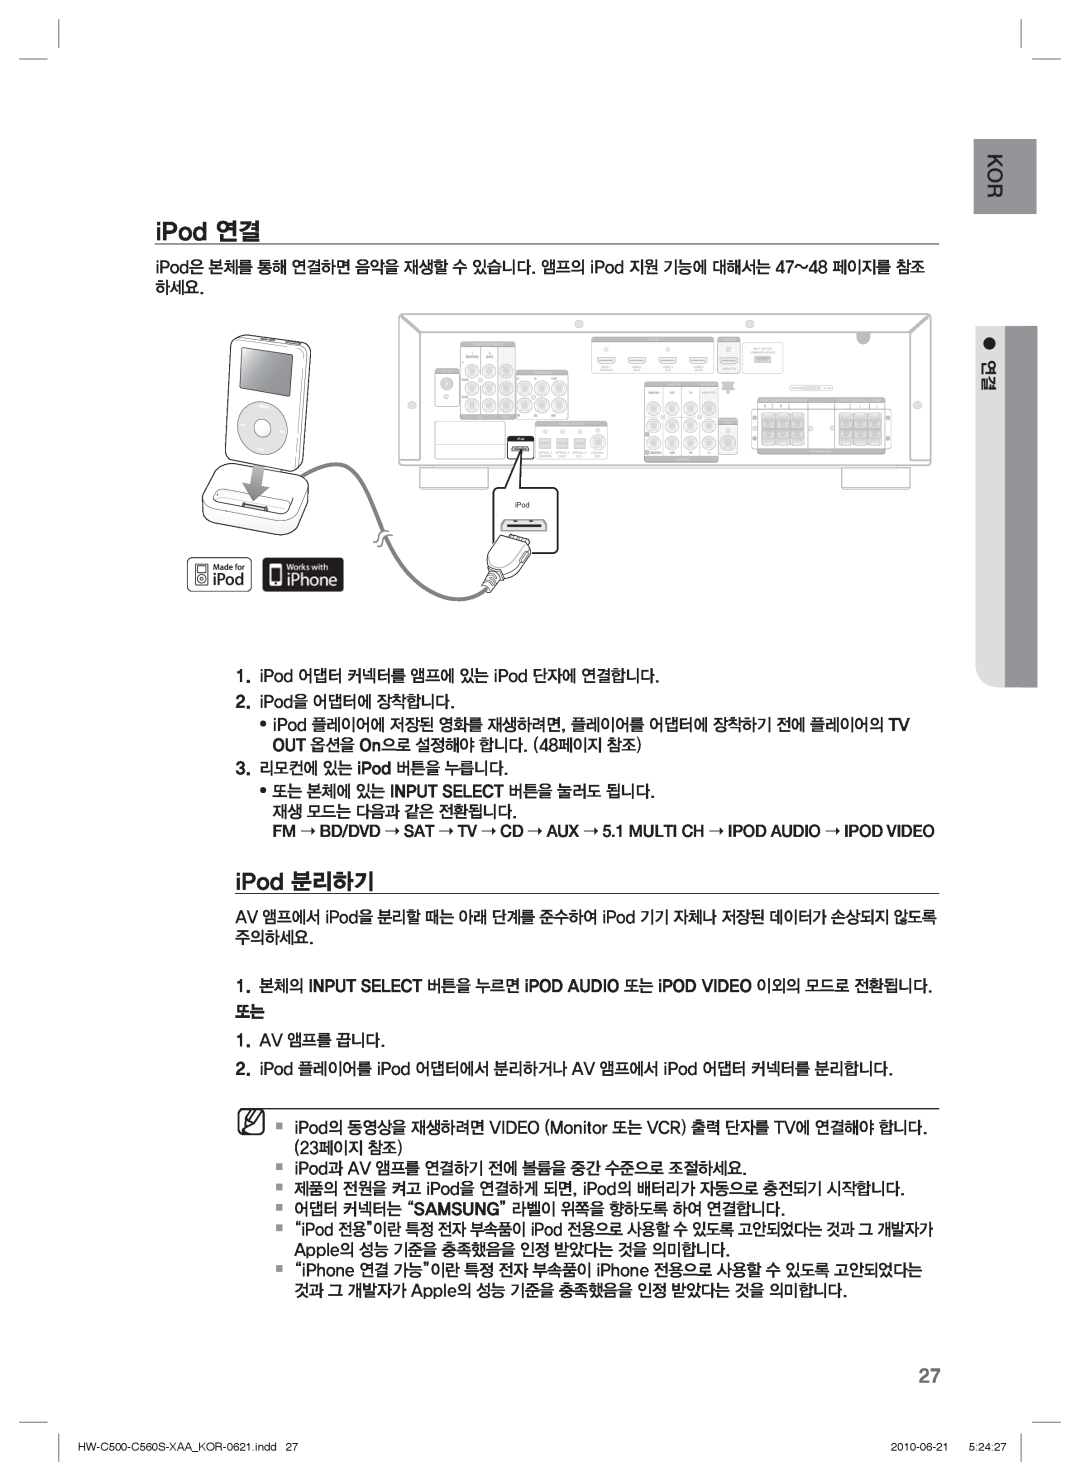 Samsung C560S manual iPod 연결, iPod 분리하기 